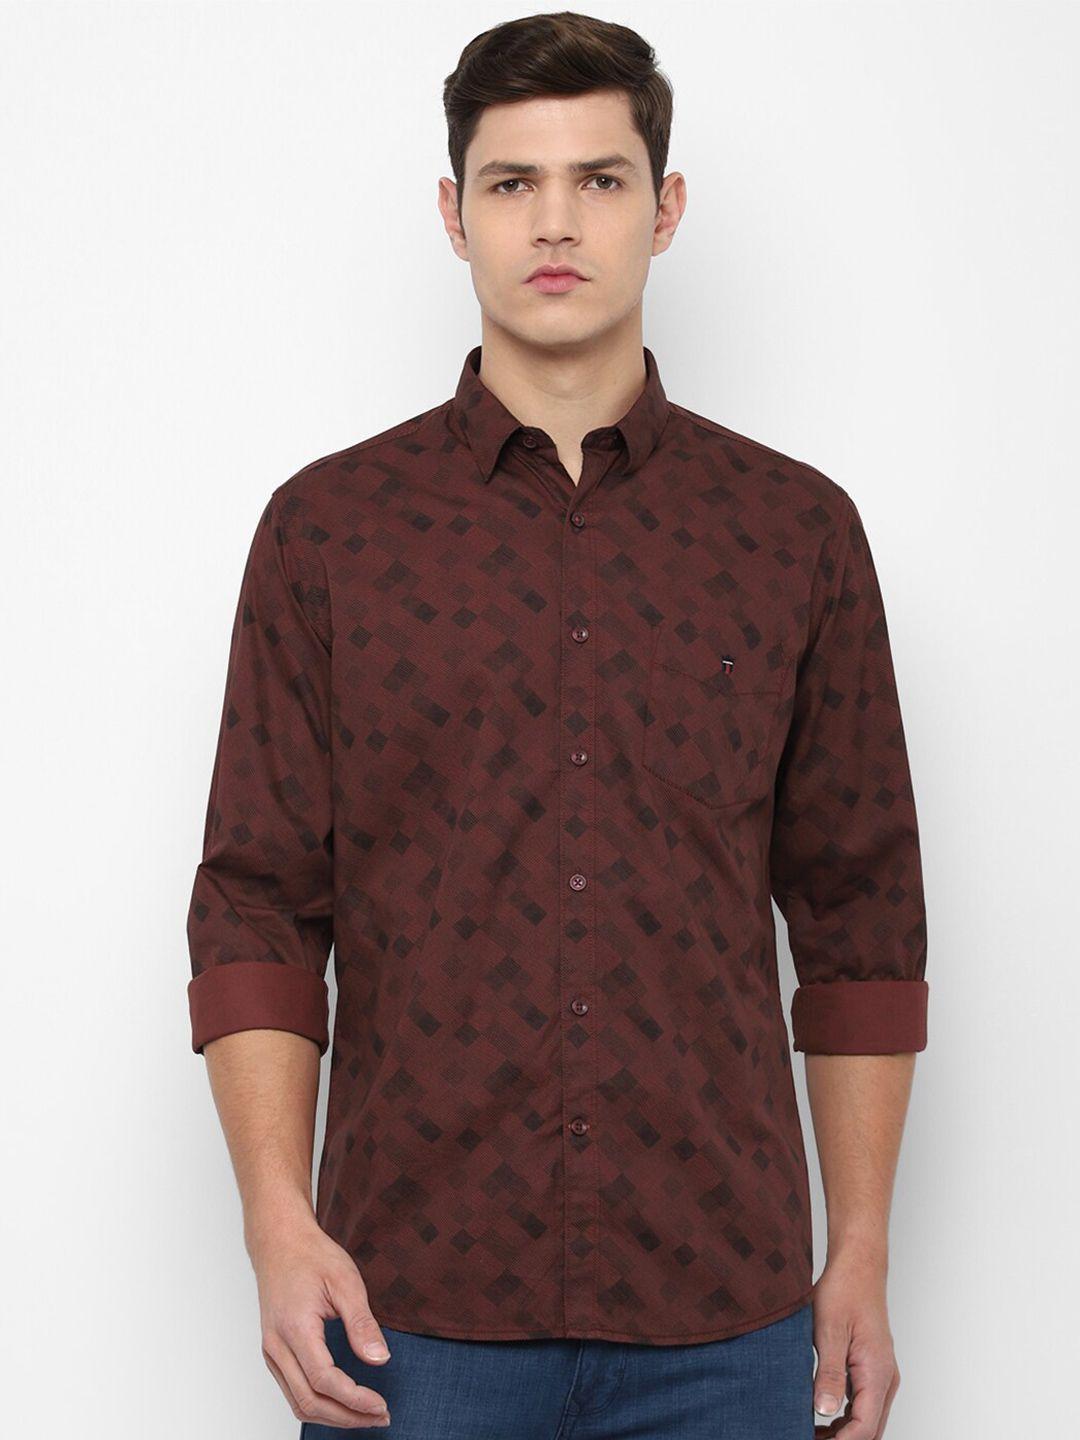 louis philippe sport men maroon & black slim fit printed cotton casual shirt